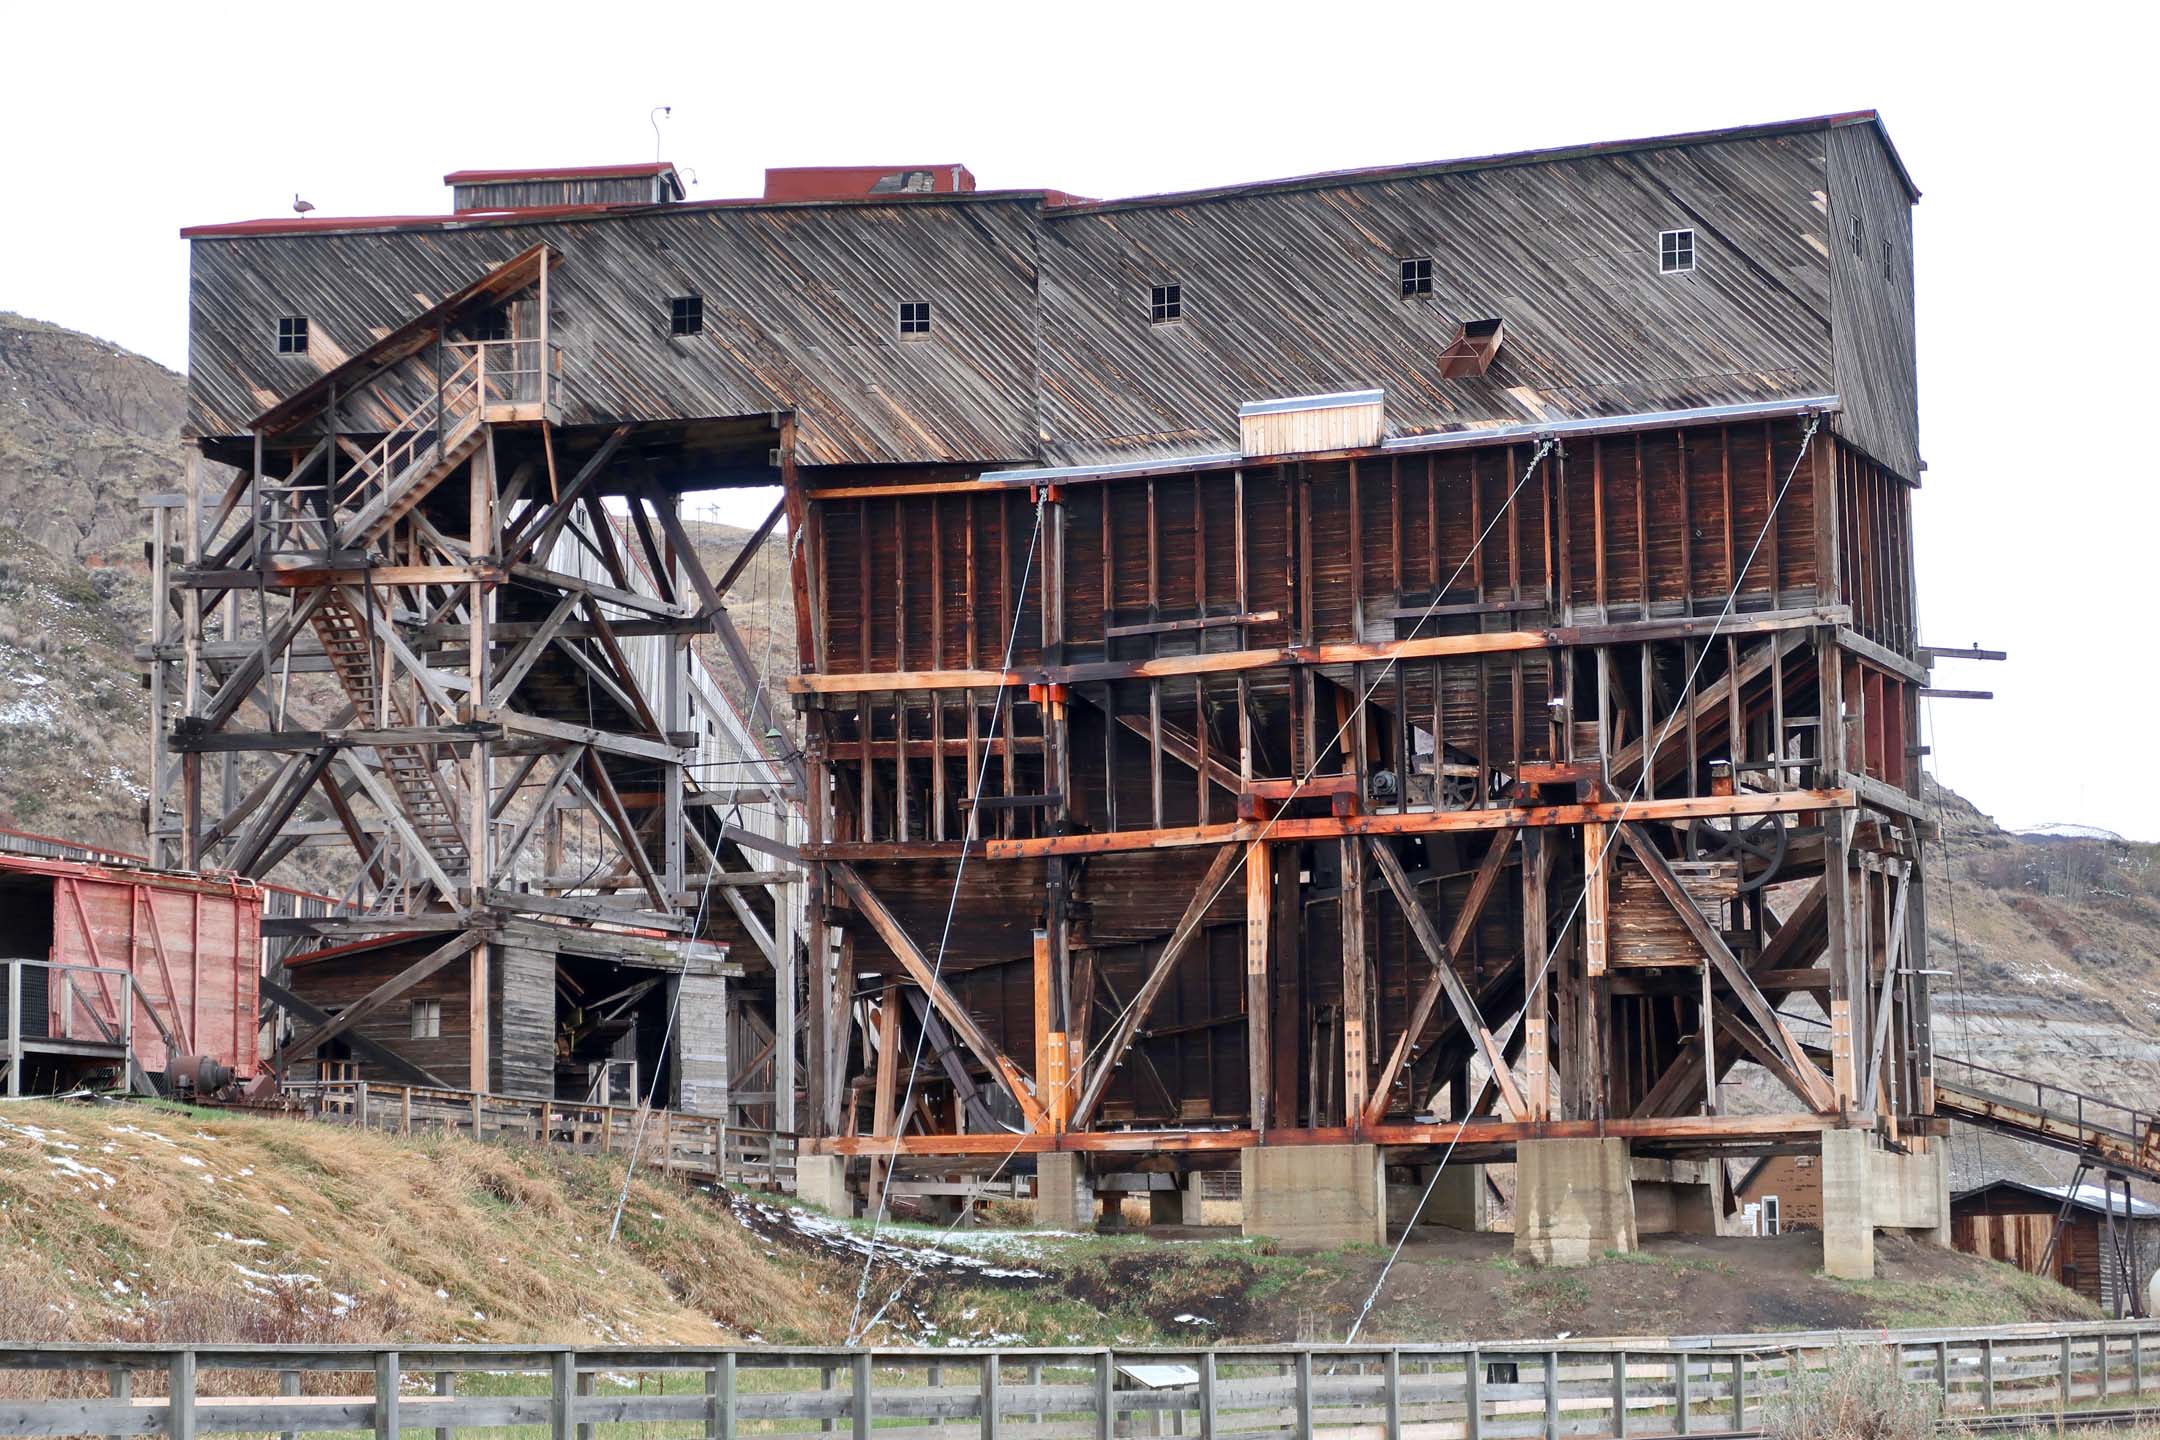 The Atlas Coal Mine National Historic Site